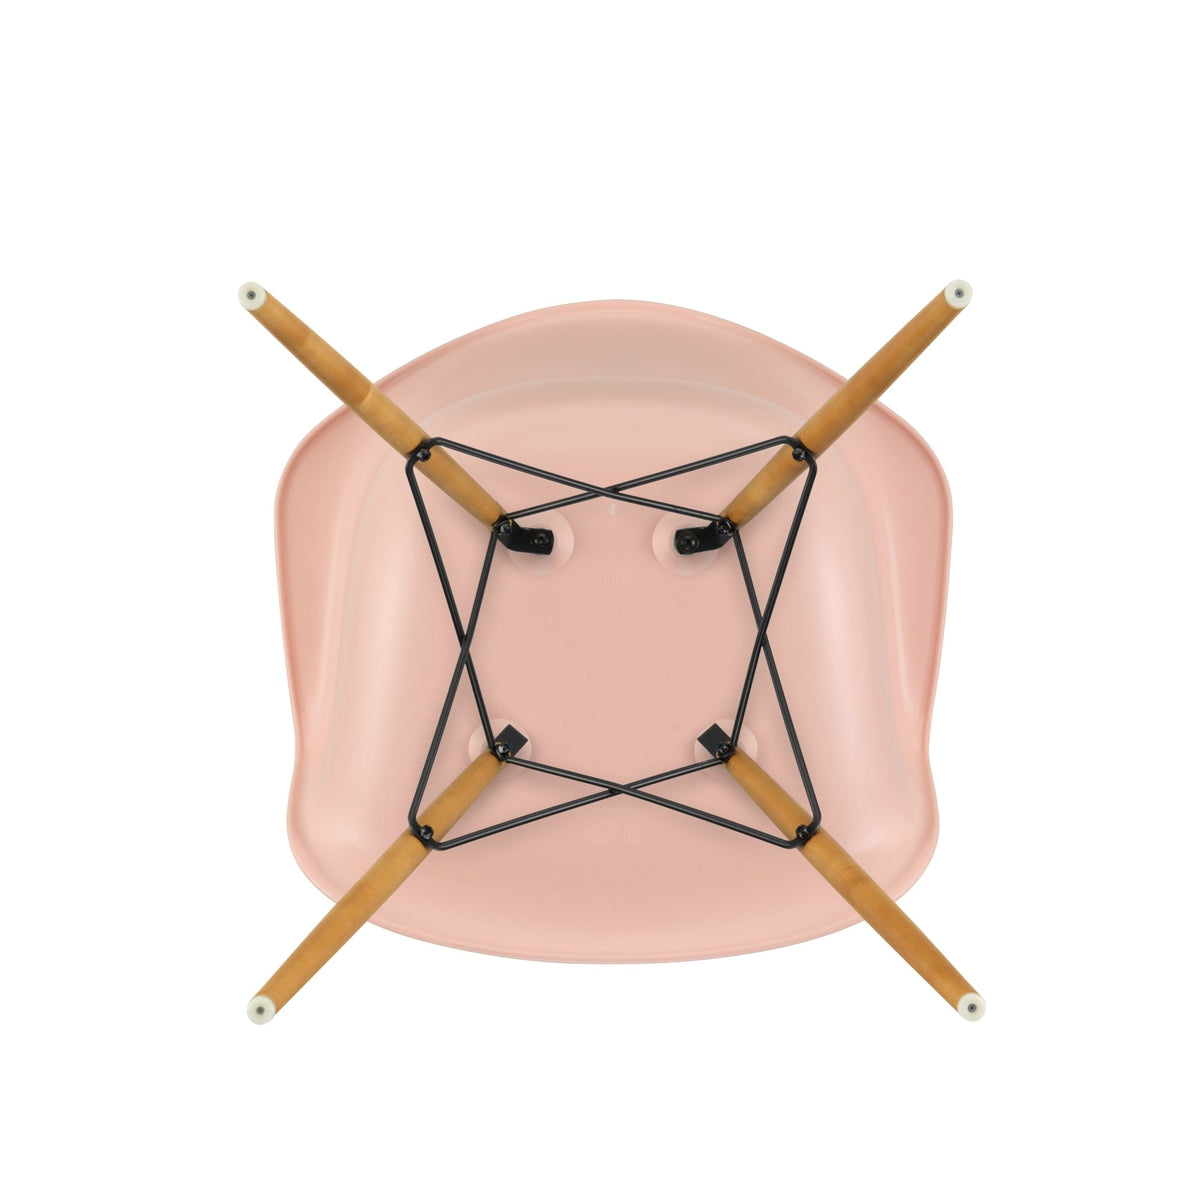 Vitra Eames DAW tuoli roosa/vaahtera - Laatukaluste